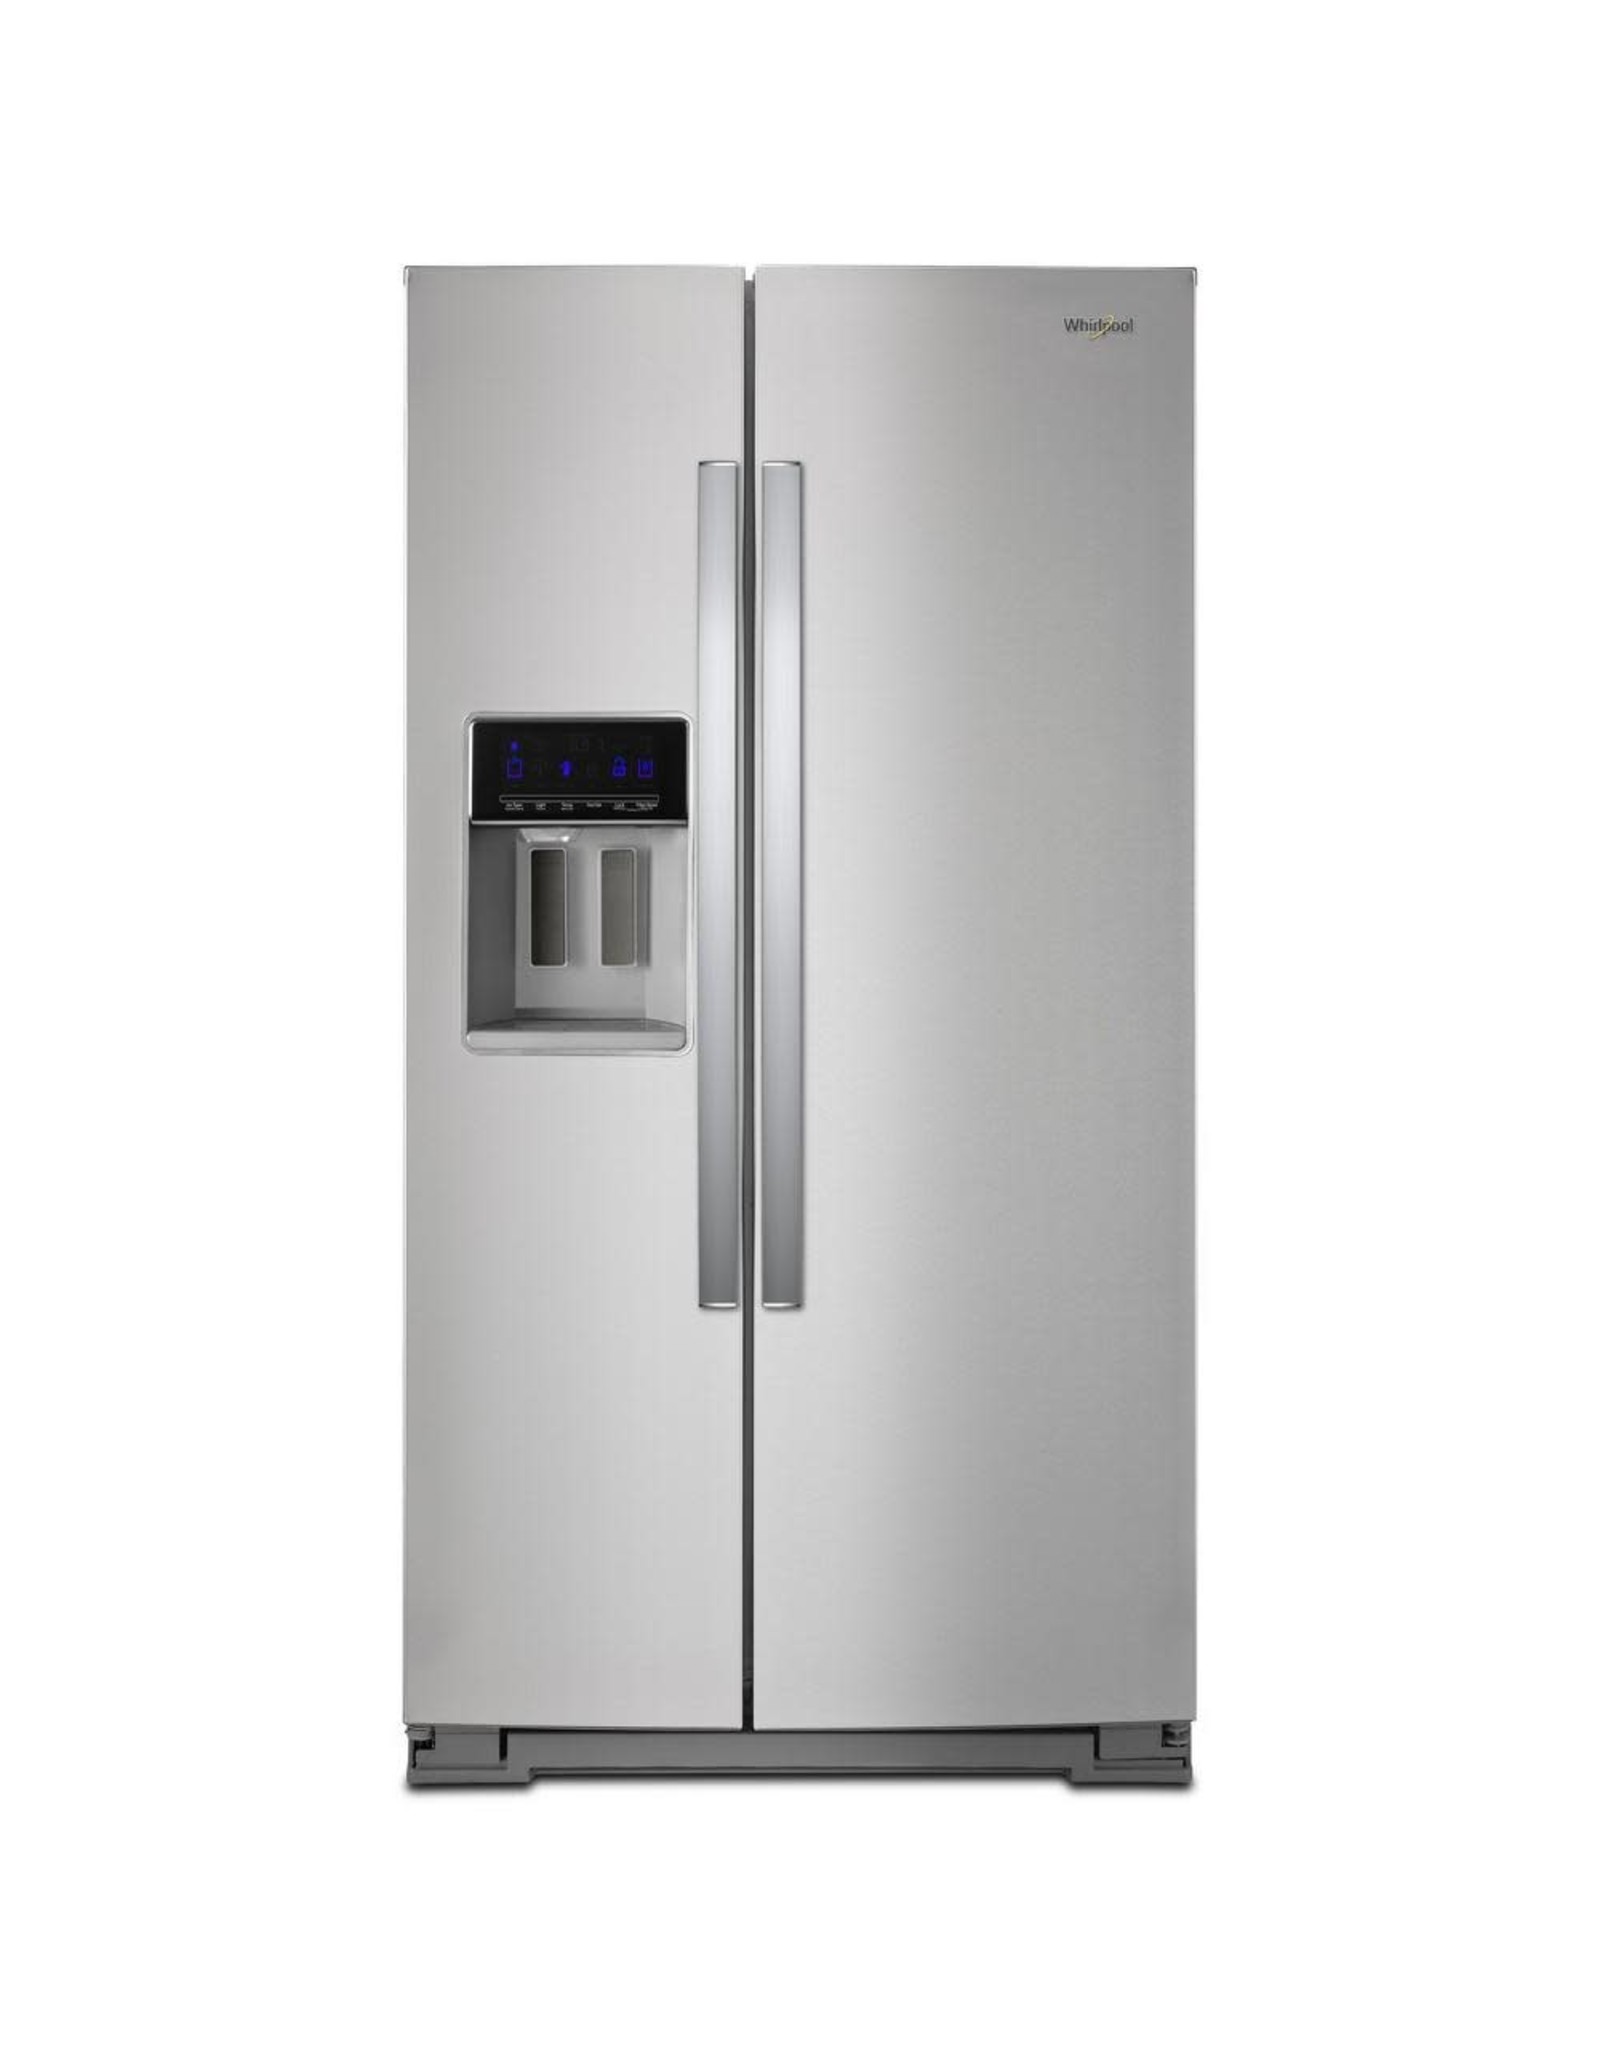 WHIRLPOOL WRS588FIHZ 28 cu. ft. Side by Side Refrigerator in Fingerprint Resistant Stainless Steel